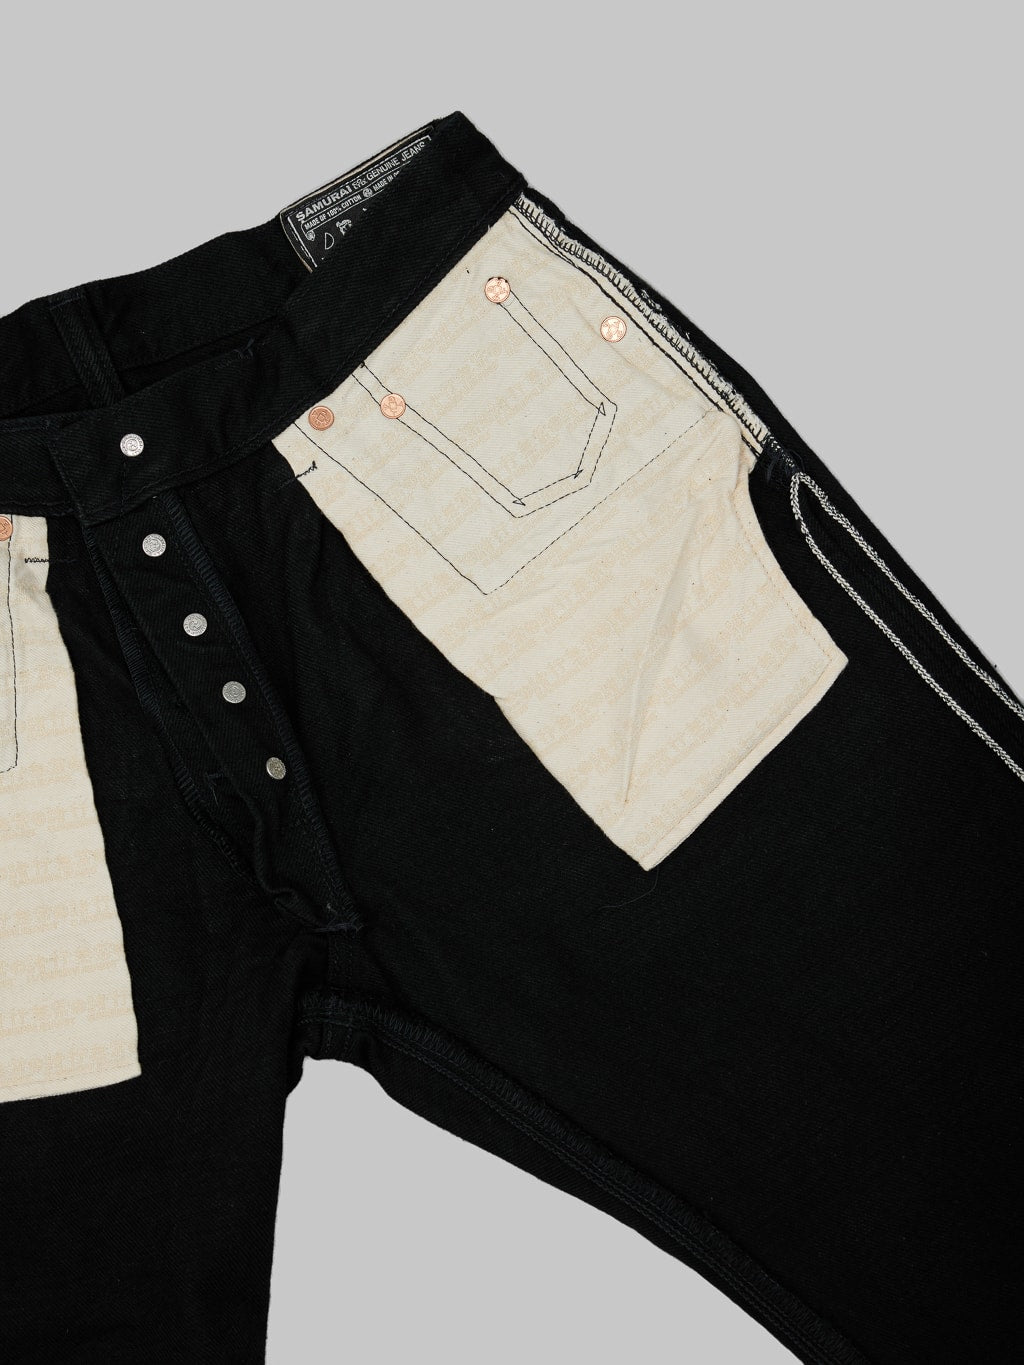 Samurai Jeans Color Fast Black x Black slim straight Jeans lining pockets